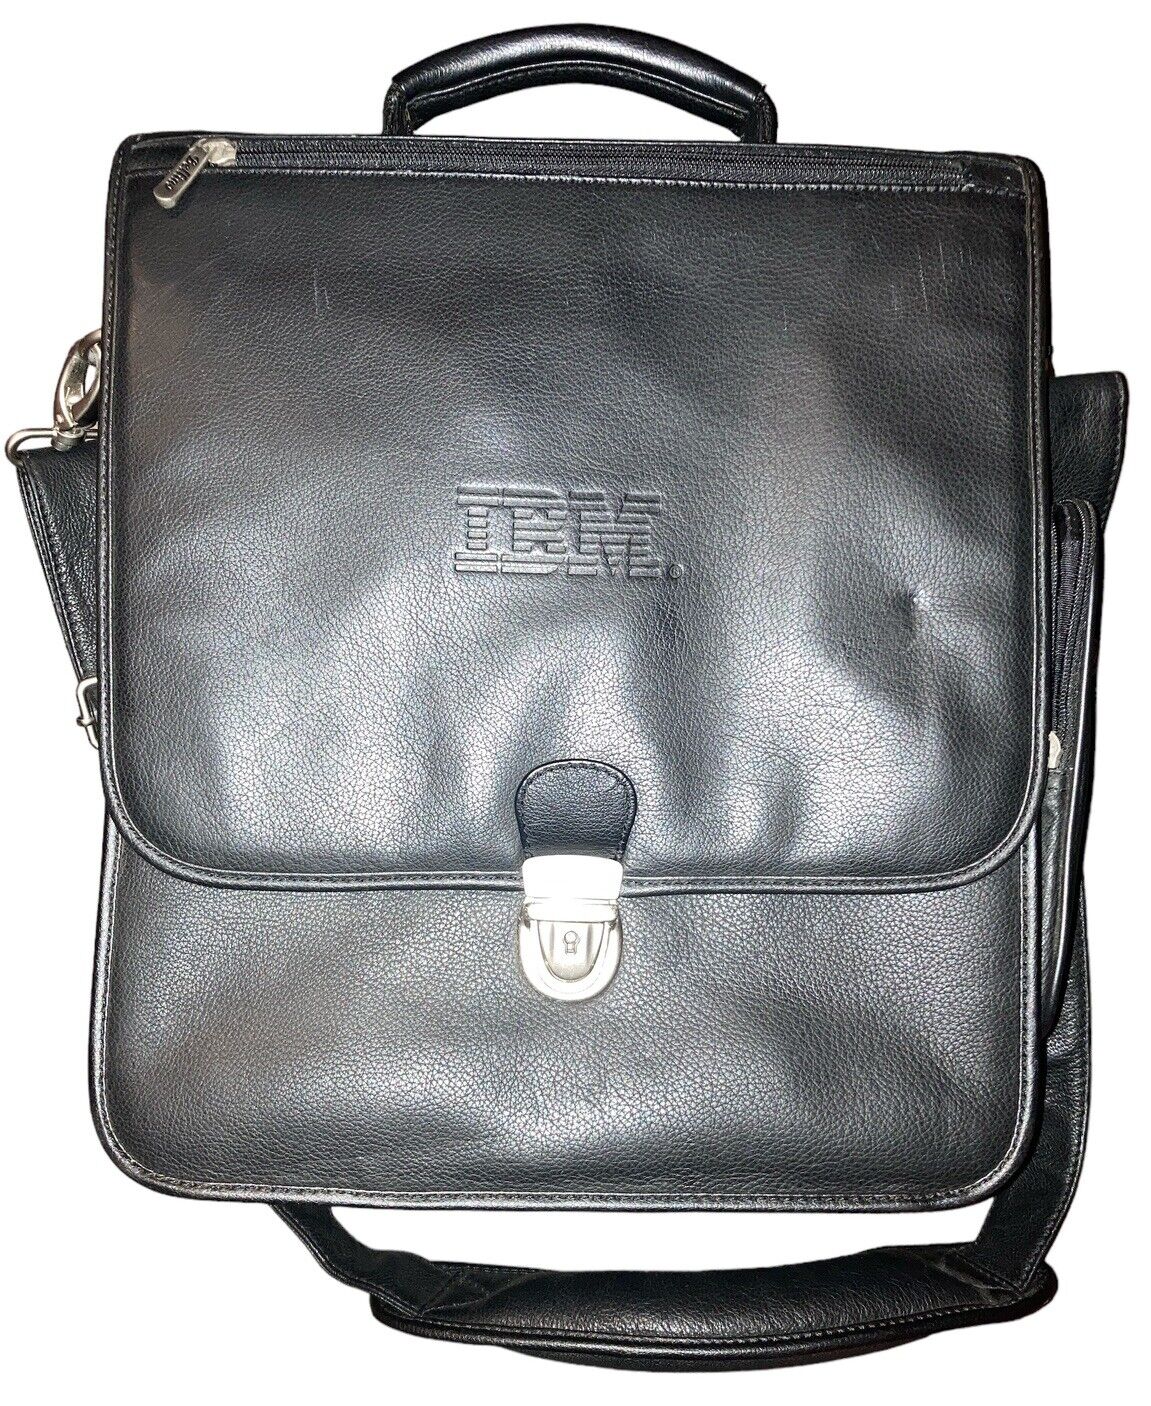 Bellino IBM Travel Bag Black Genuine Leather Messenger Laptop Bag Carrying Case